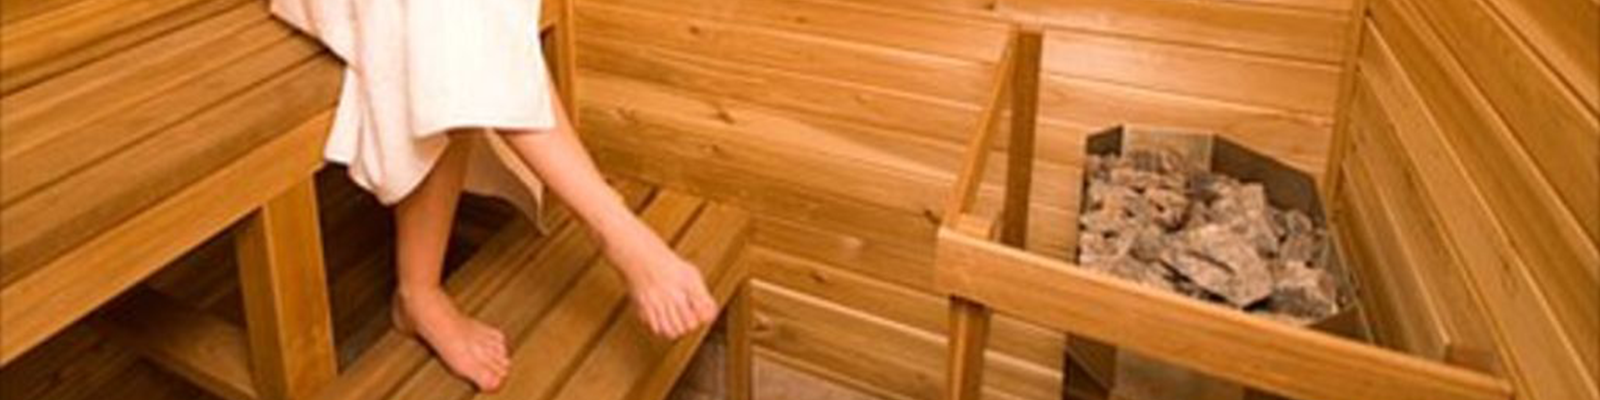 Heat Source Post Feature Image of Sauna